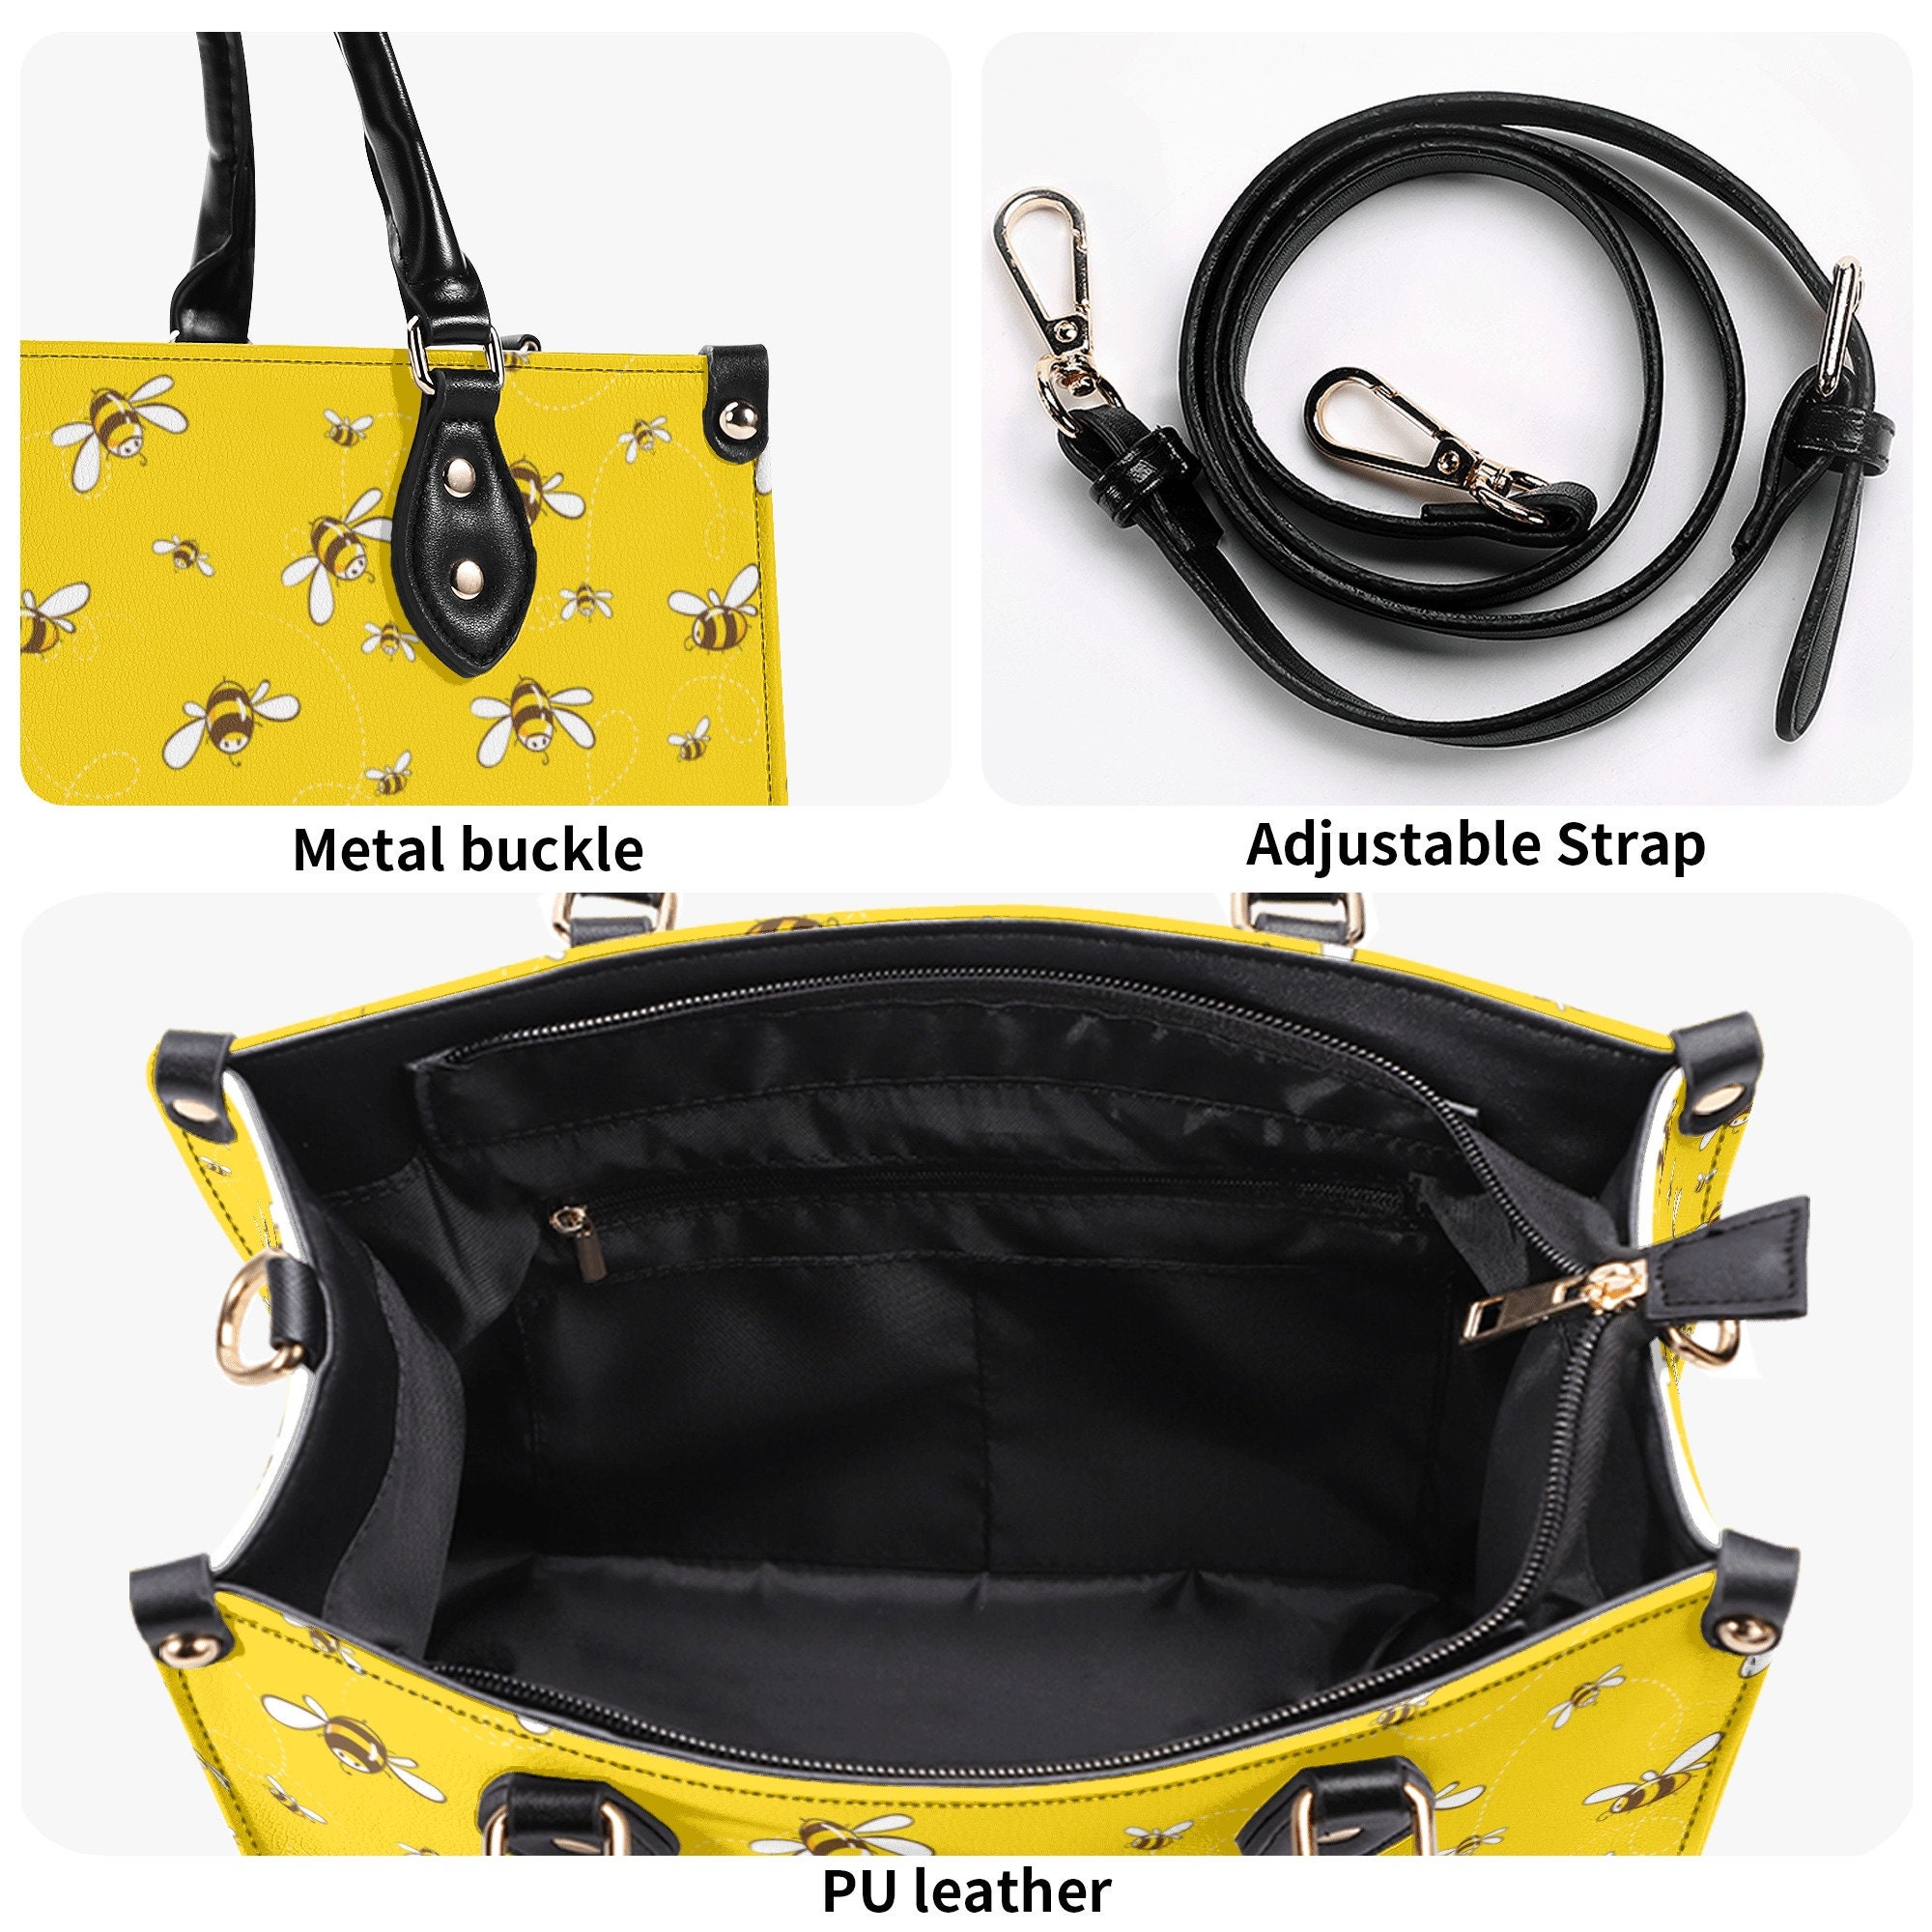 Bee Women Leather Handbag, Travel handbag, Gift for fan